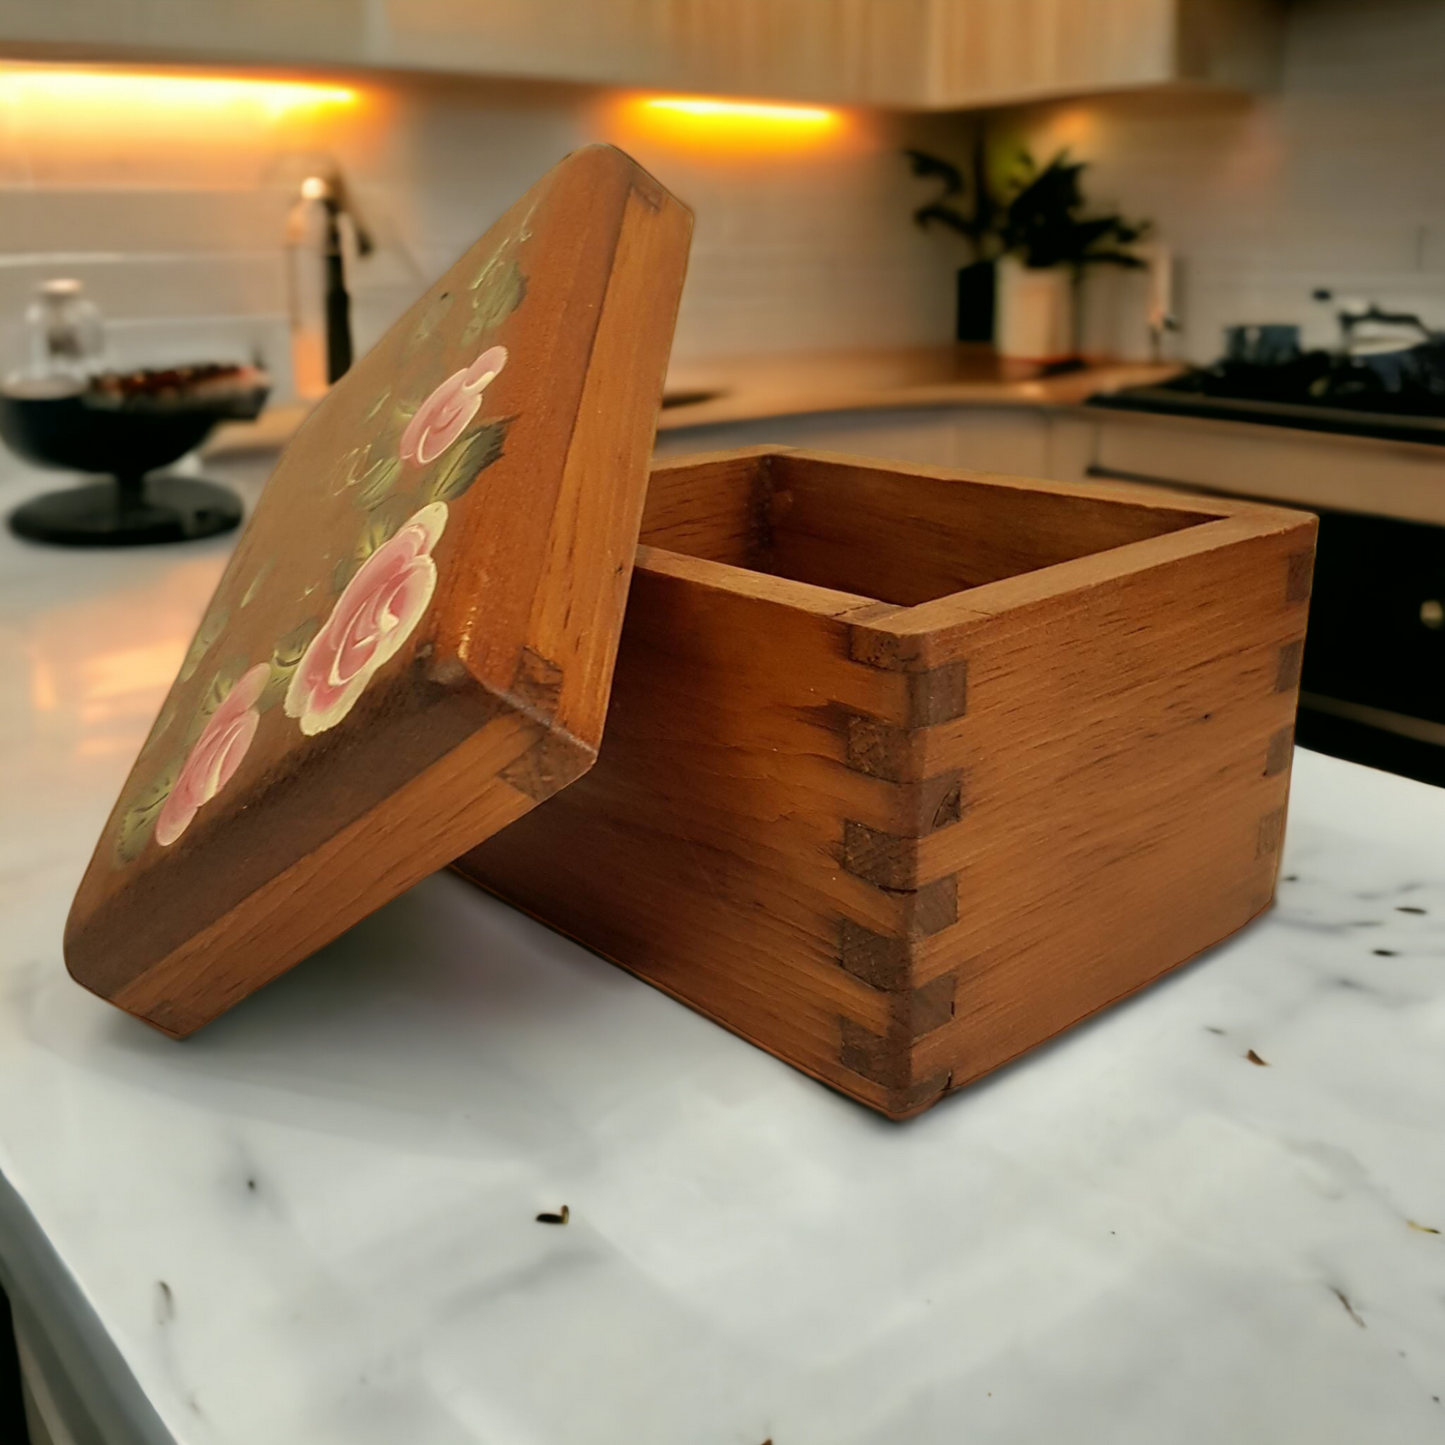 Finger Jointed Wooden Recipe Box Keepsake Dovetailed Box